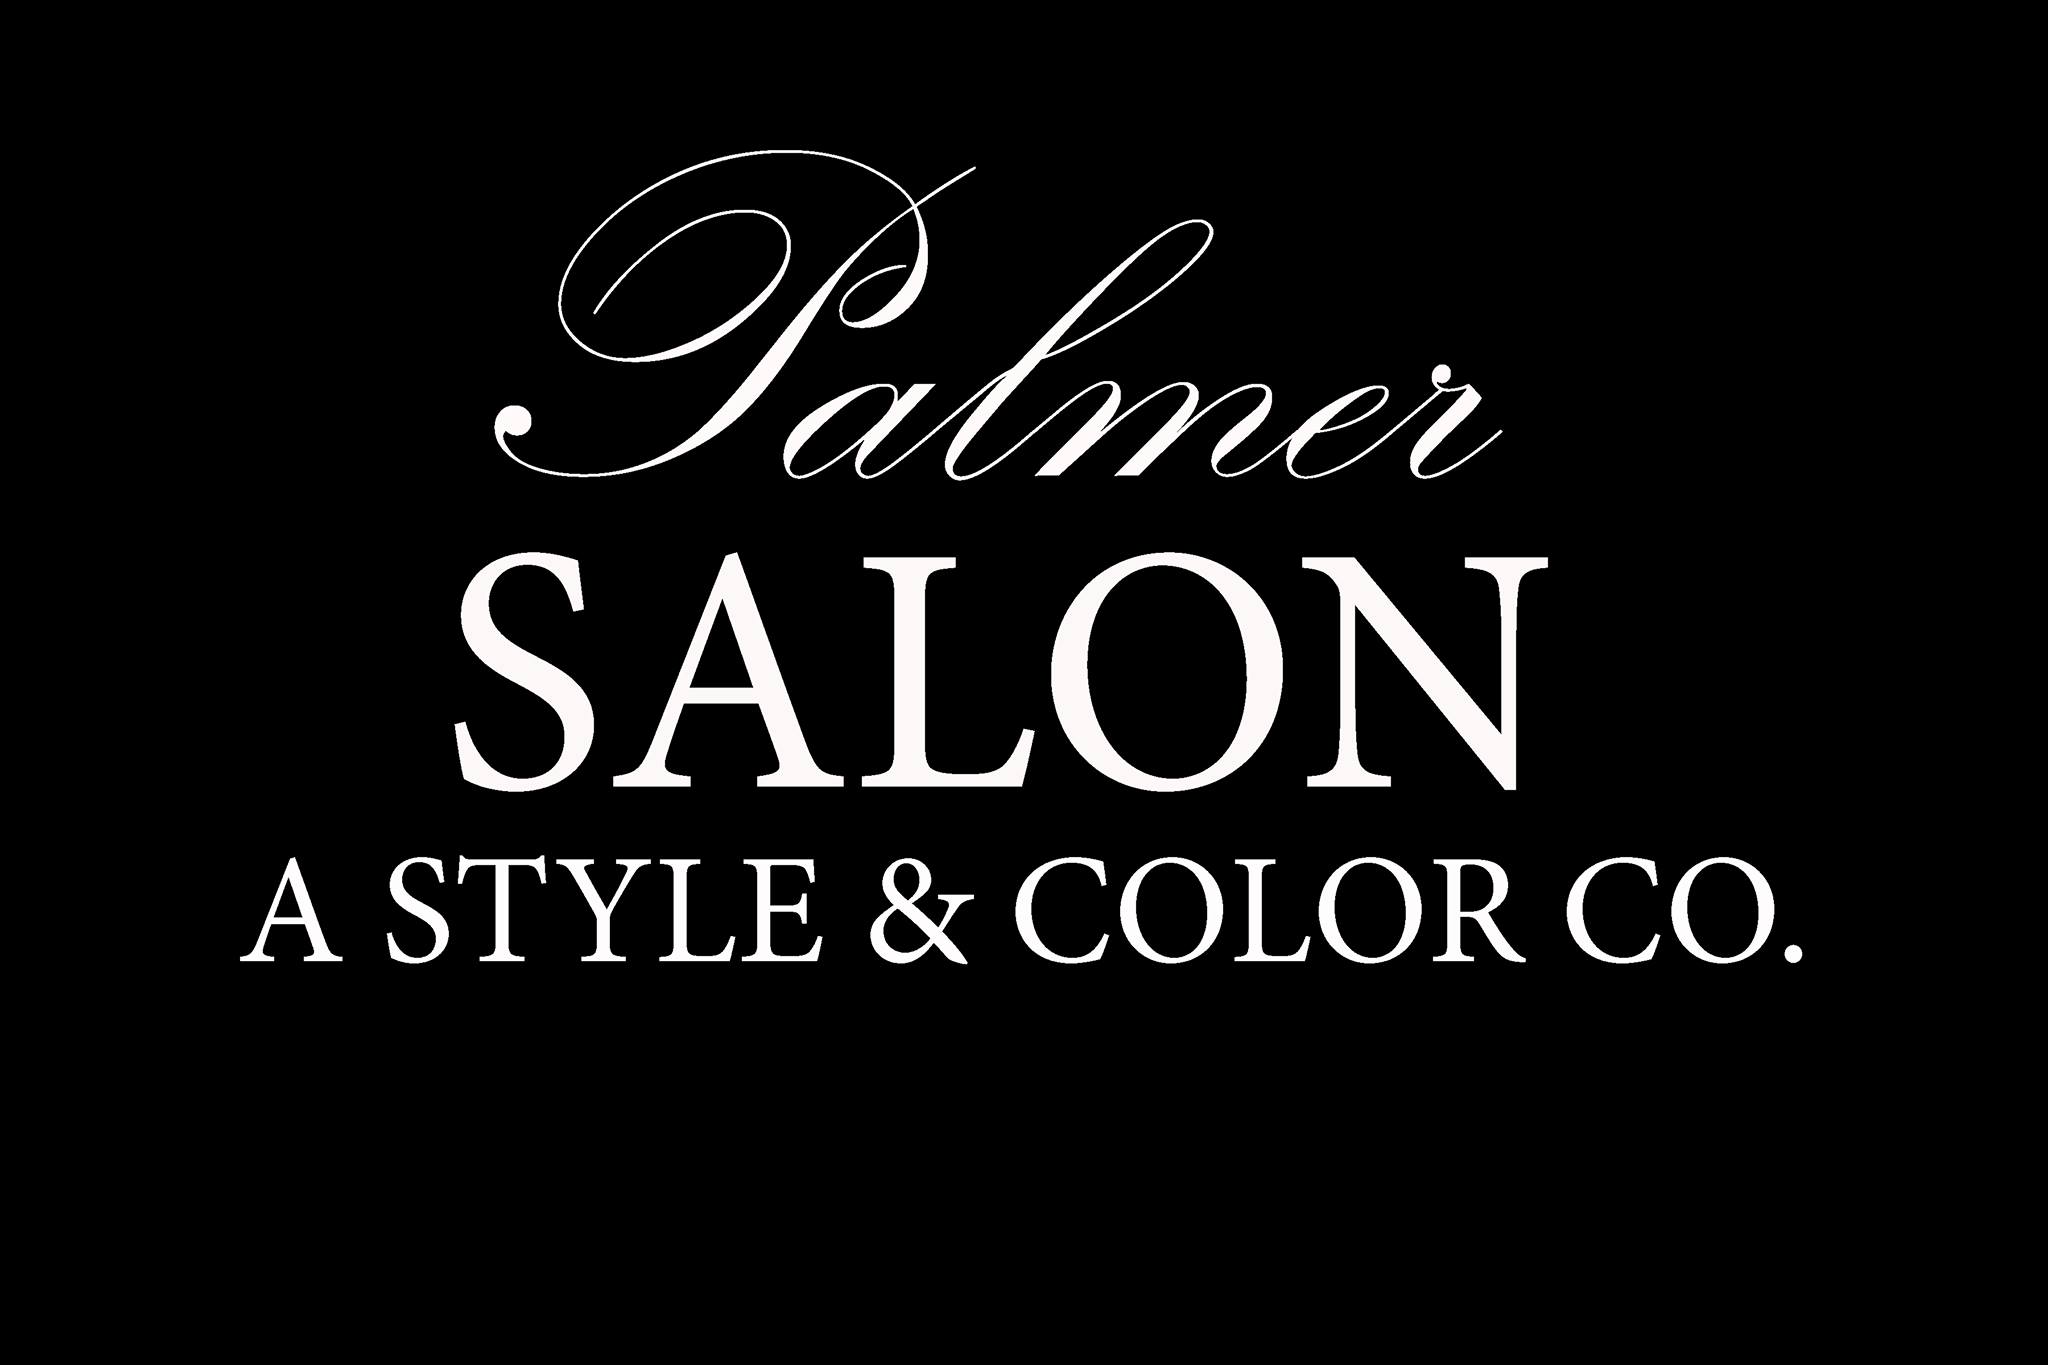 PALMER SALON A STYLE & COLOR CO.